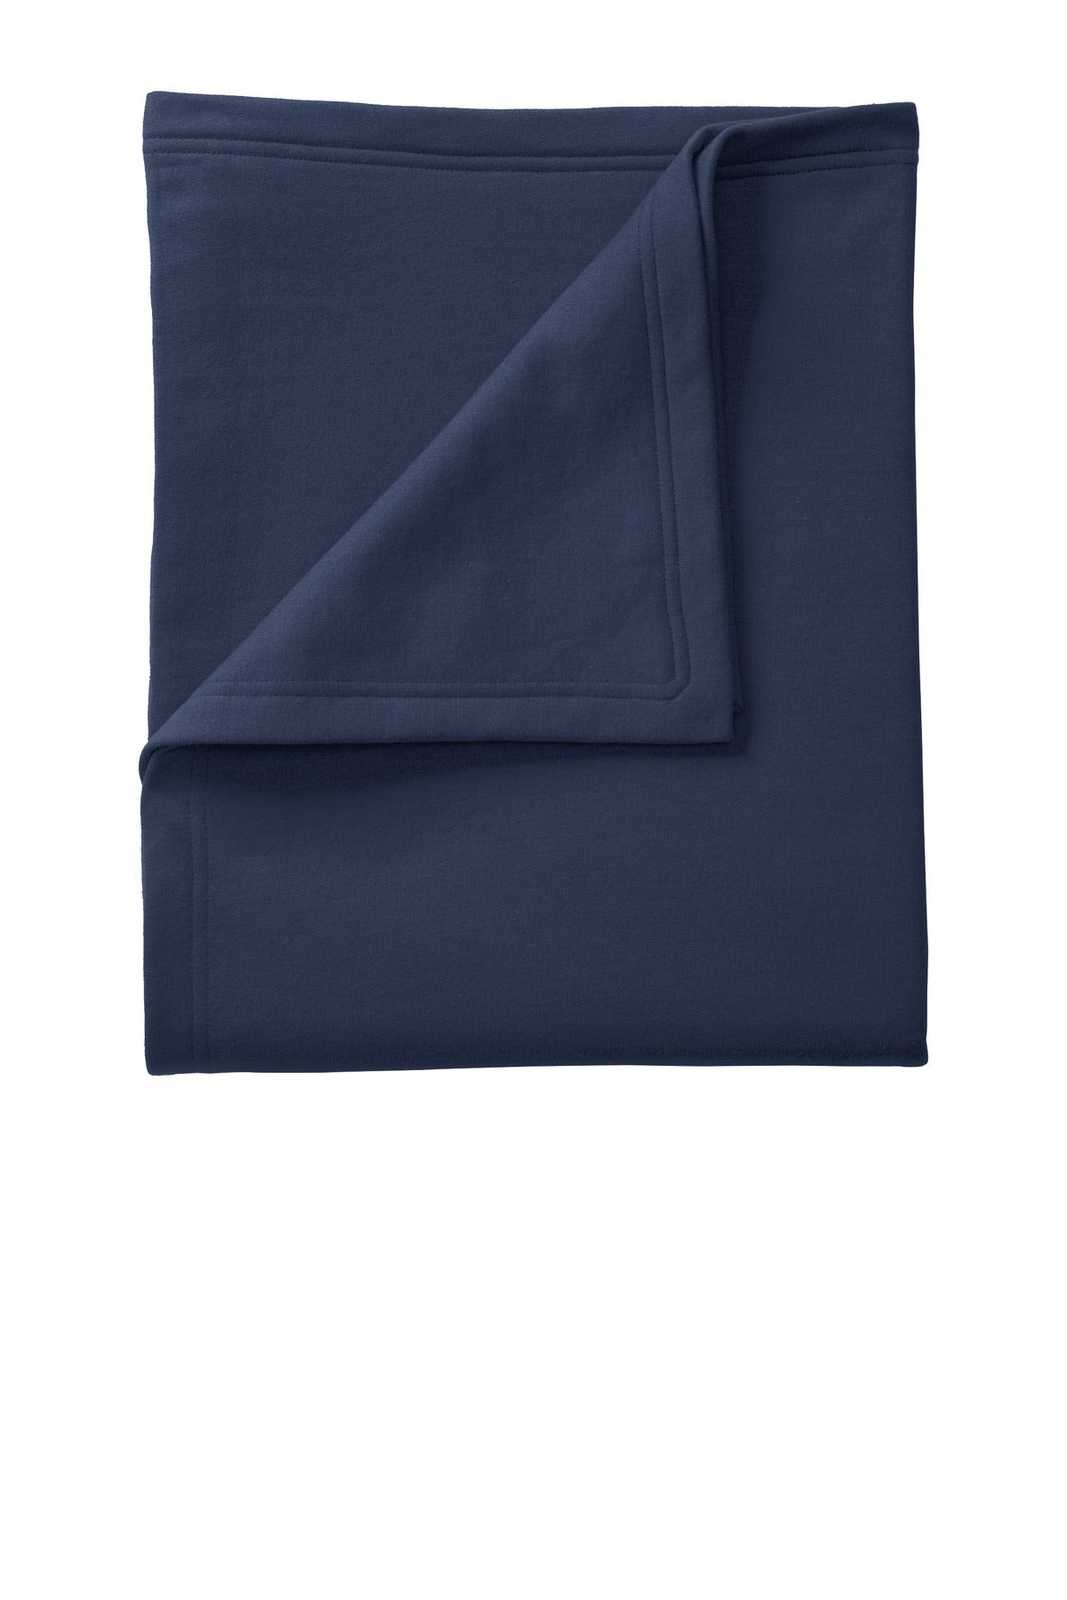 Port & Company BP78 Core Fleece Sweatshirt Blanket - Navy - HIT a Double - 1